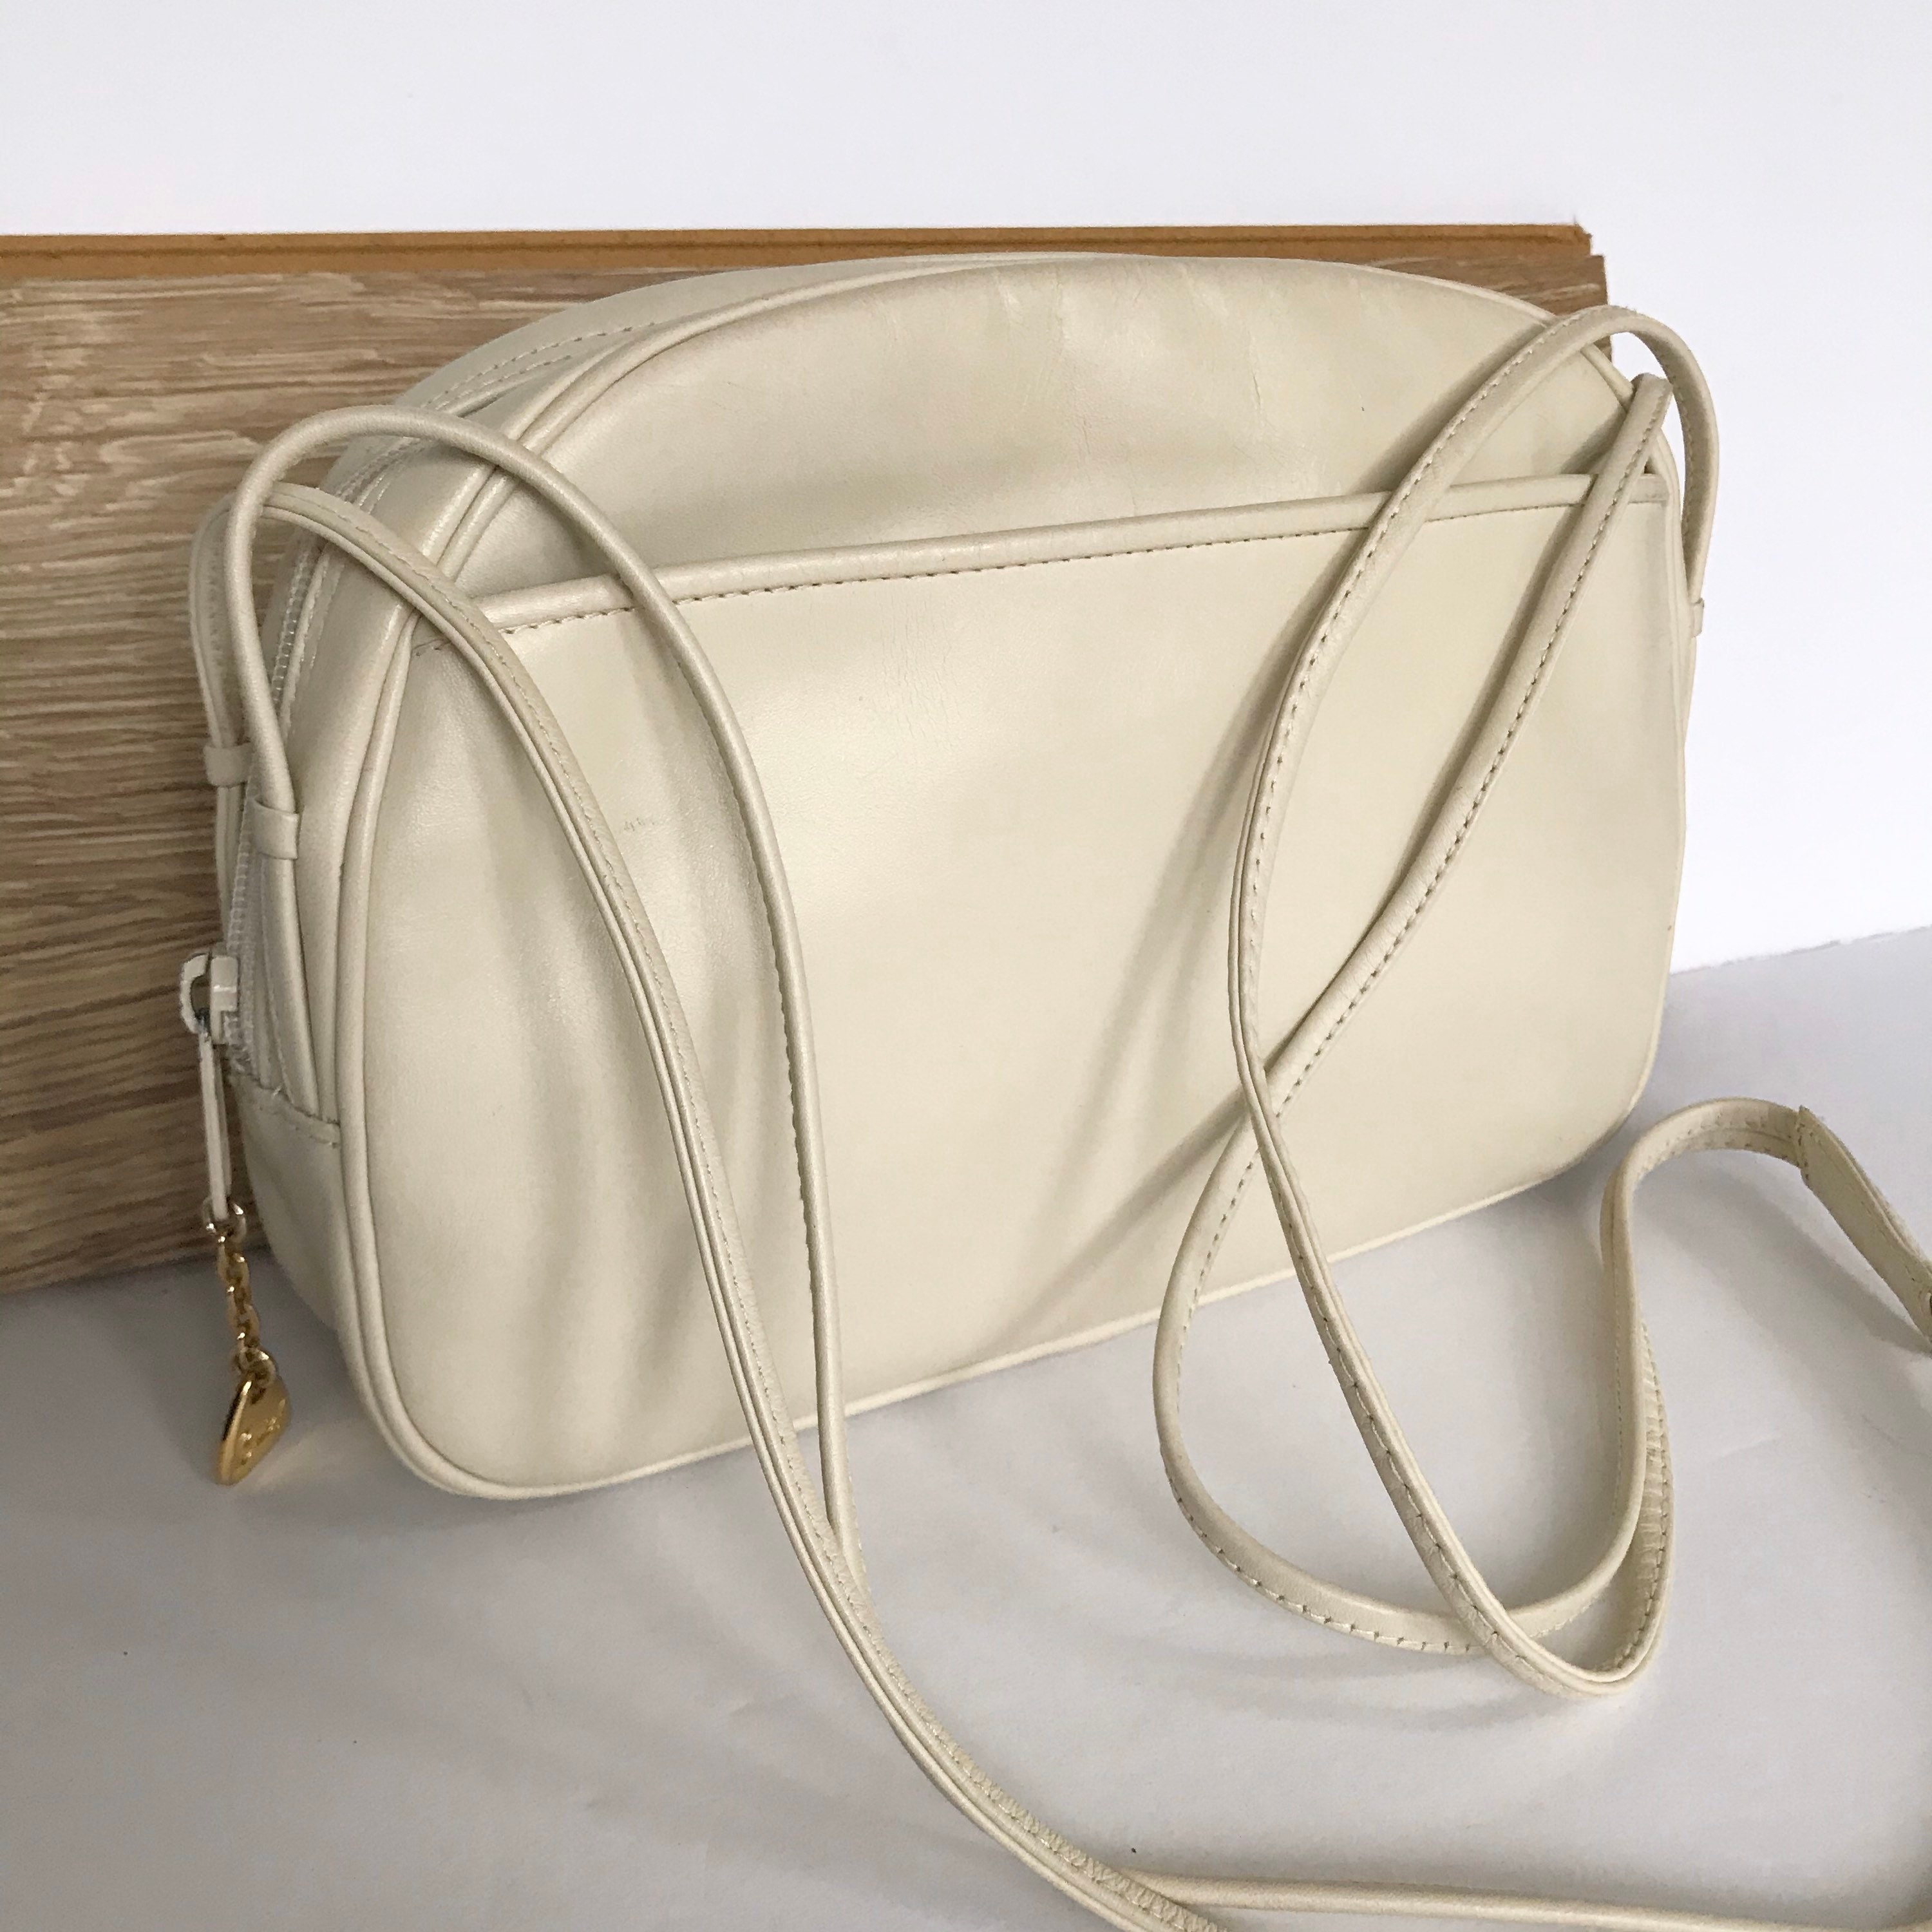 Ganson Handbags for sale | Only 4 left at -70%